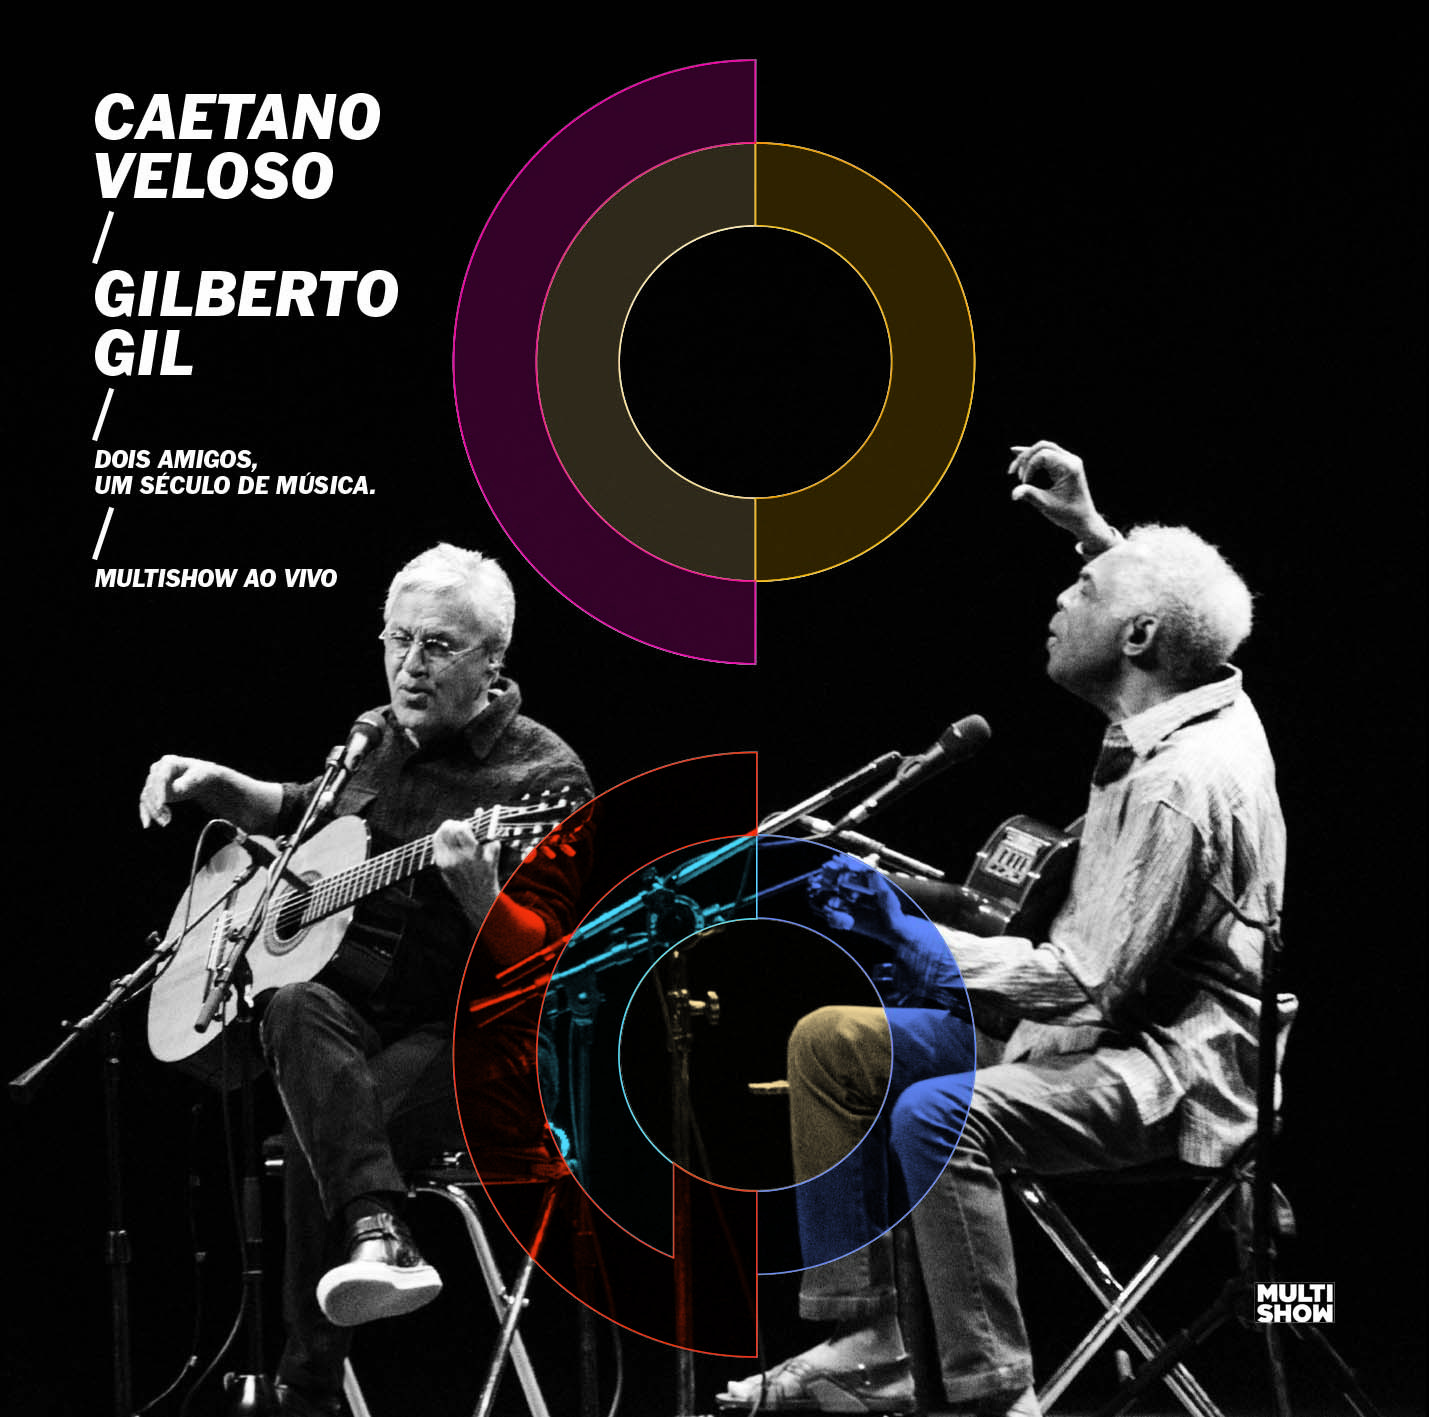 Capa Caetano & Gil.tif